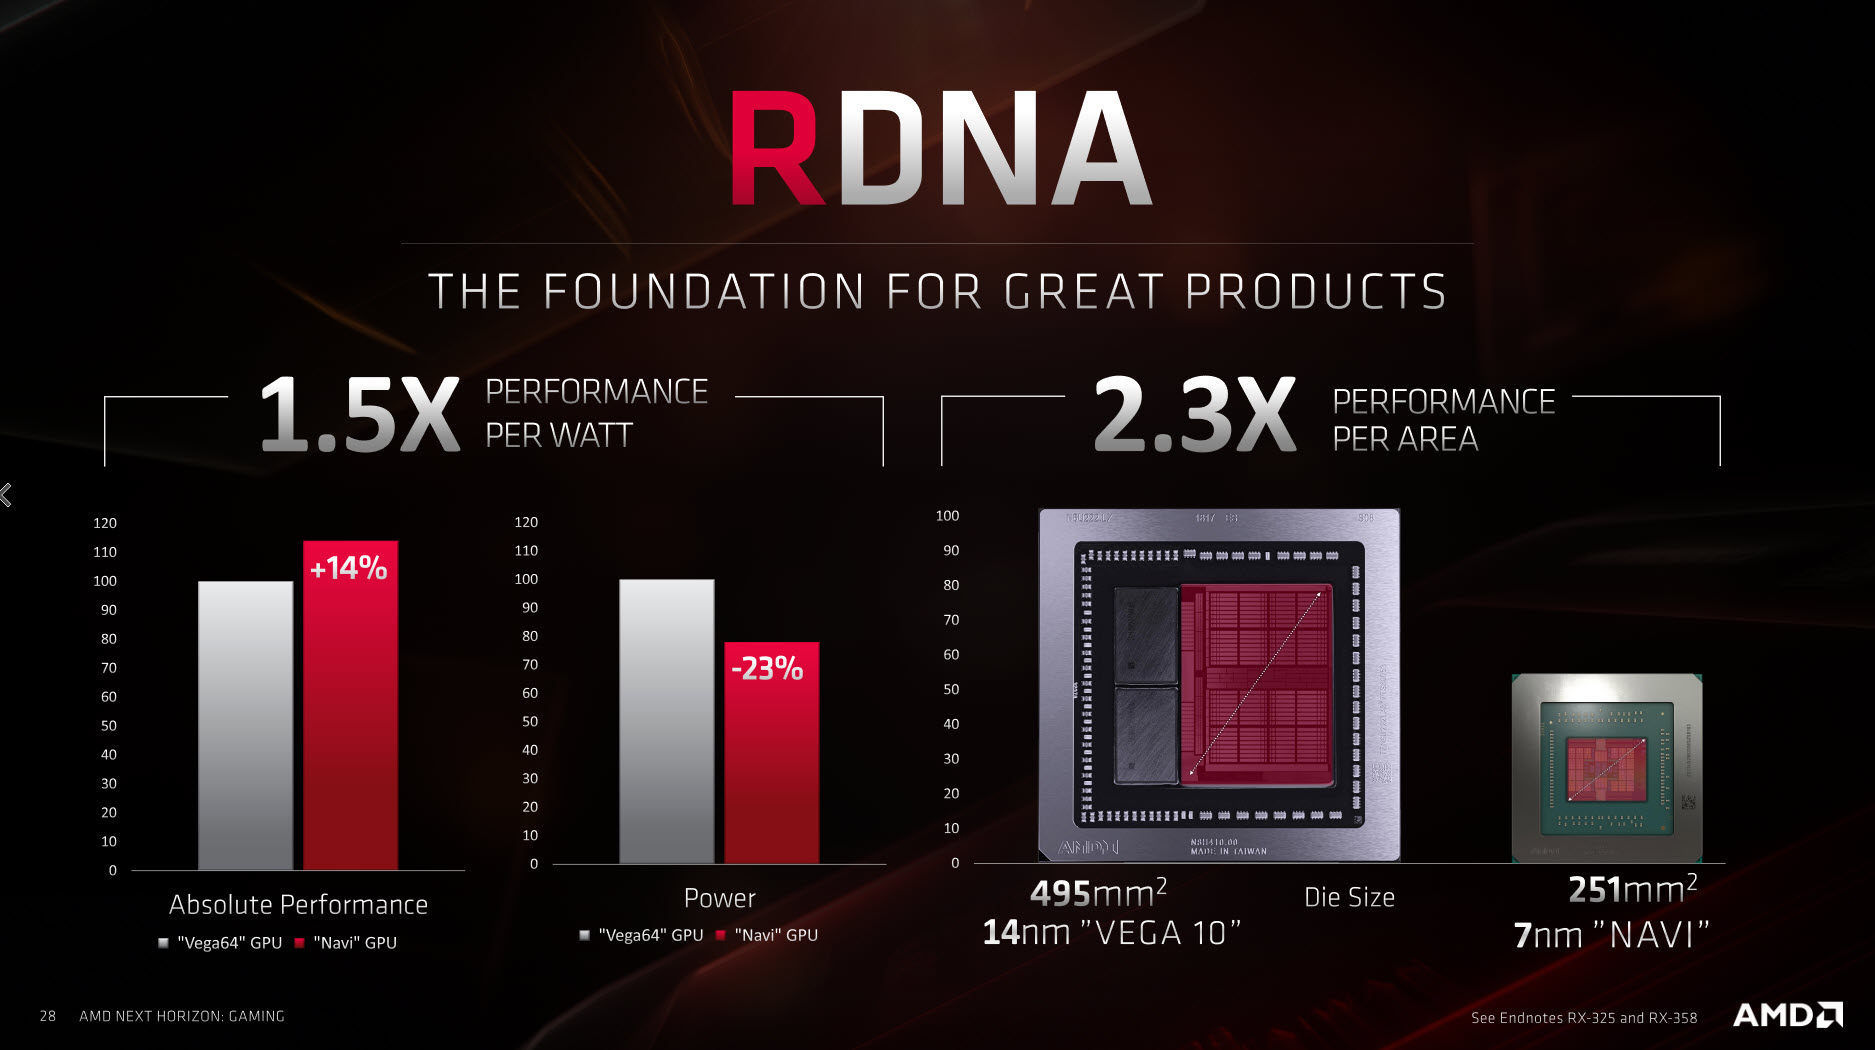 2019 07 07 10 30 20 AMD RADEON RX 5700 XT REVIEW